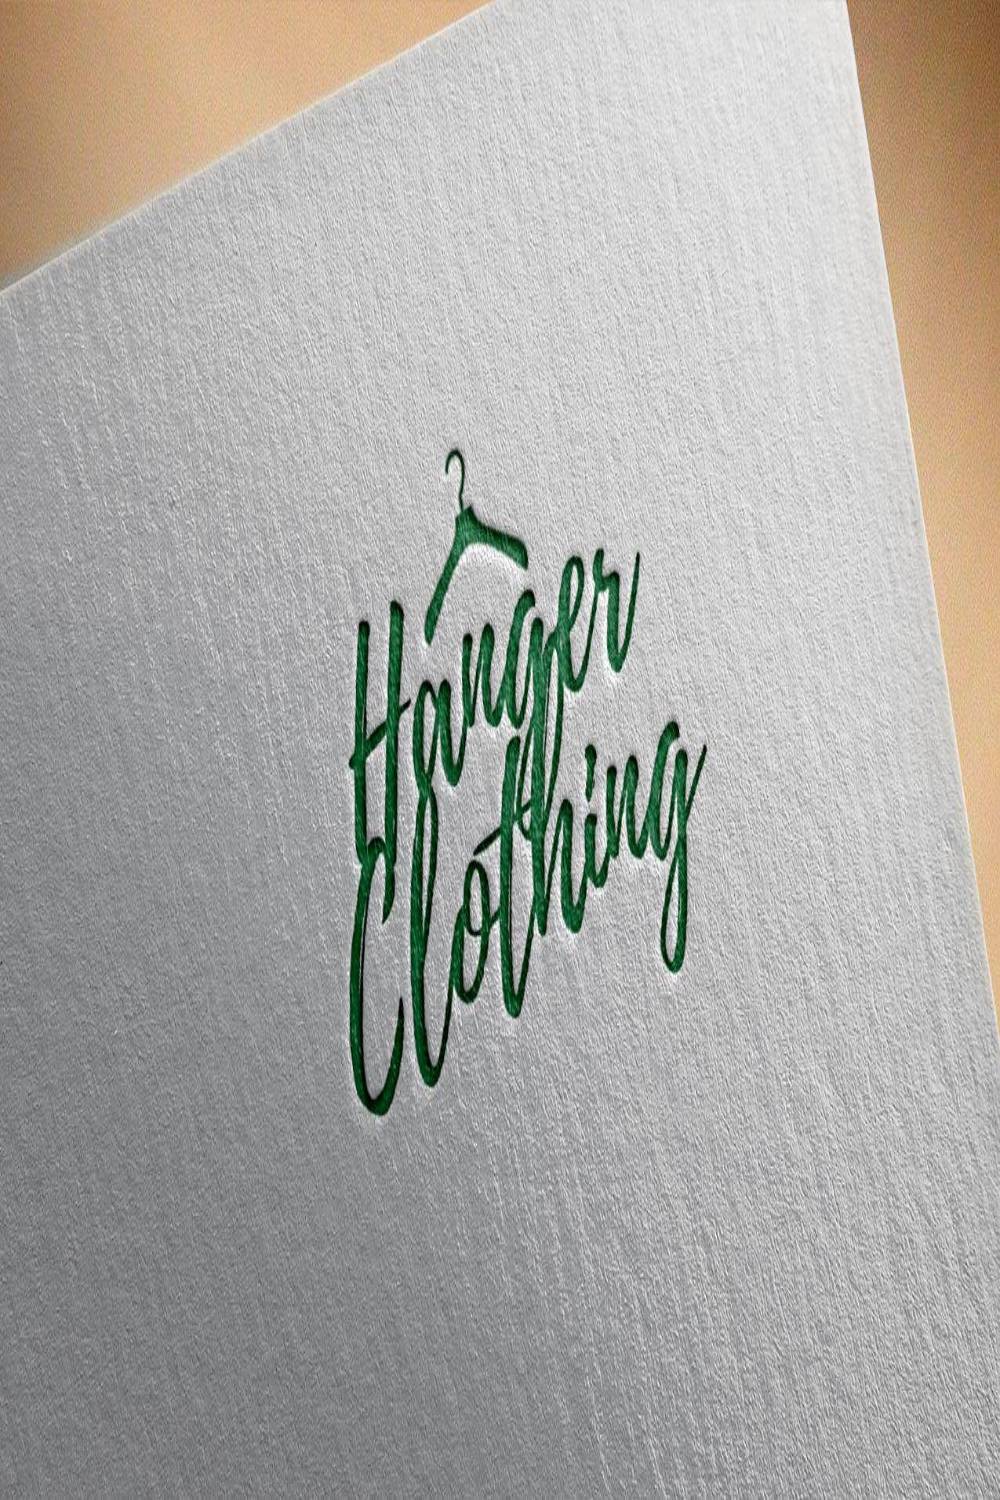 Hanger Clothing Logo Design pinterest image.